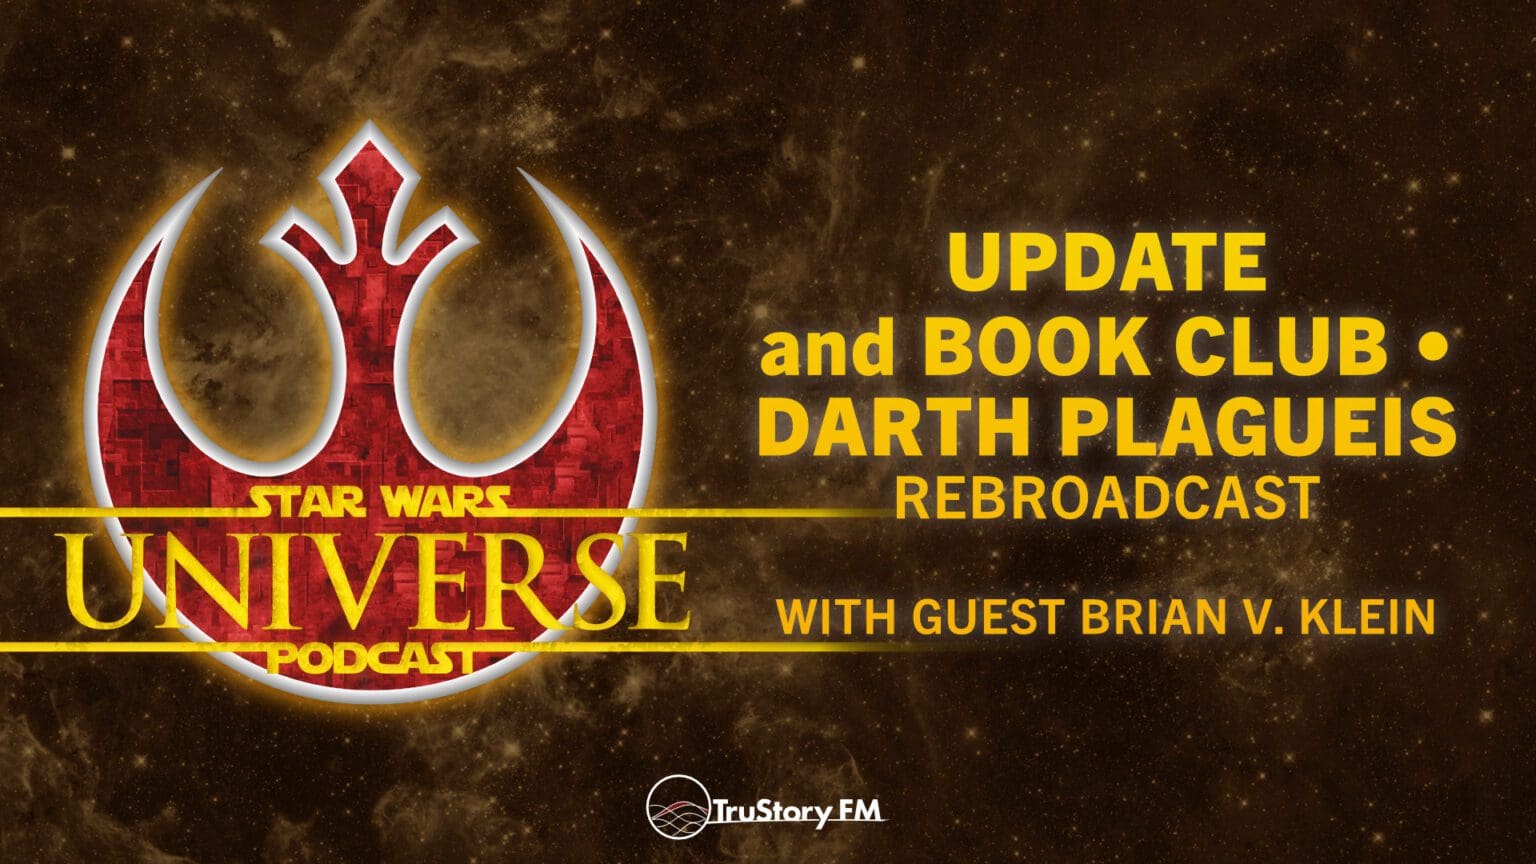 Star Wars Universe Podcast episode 214